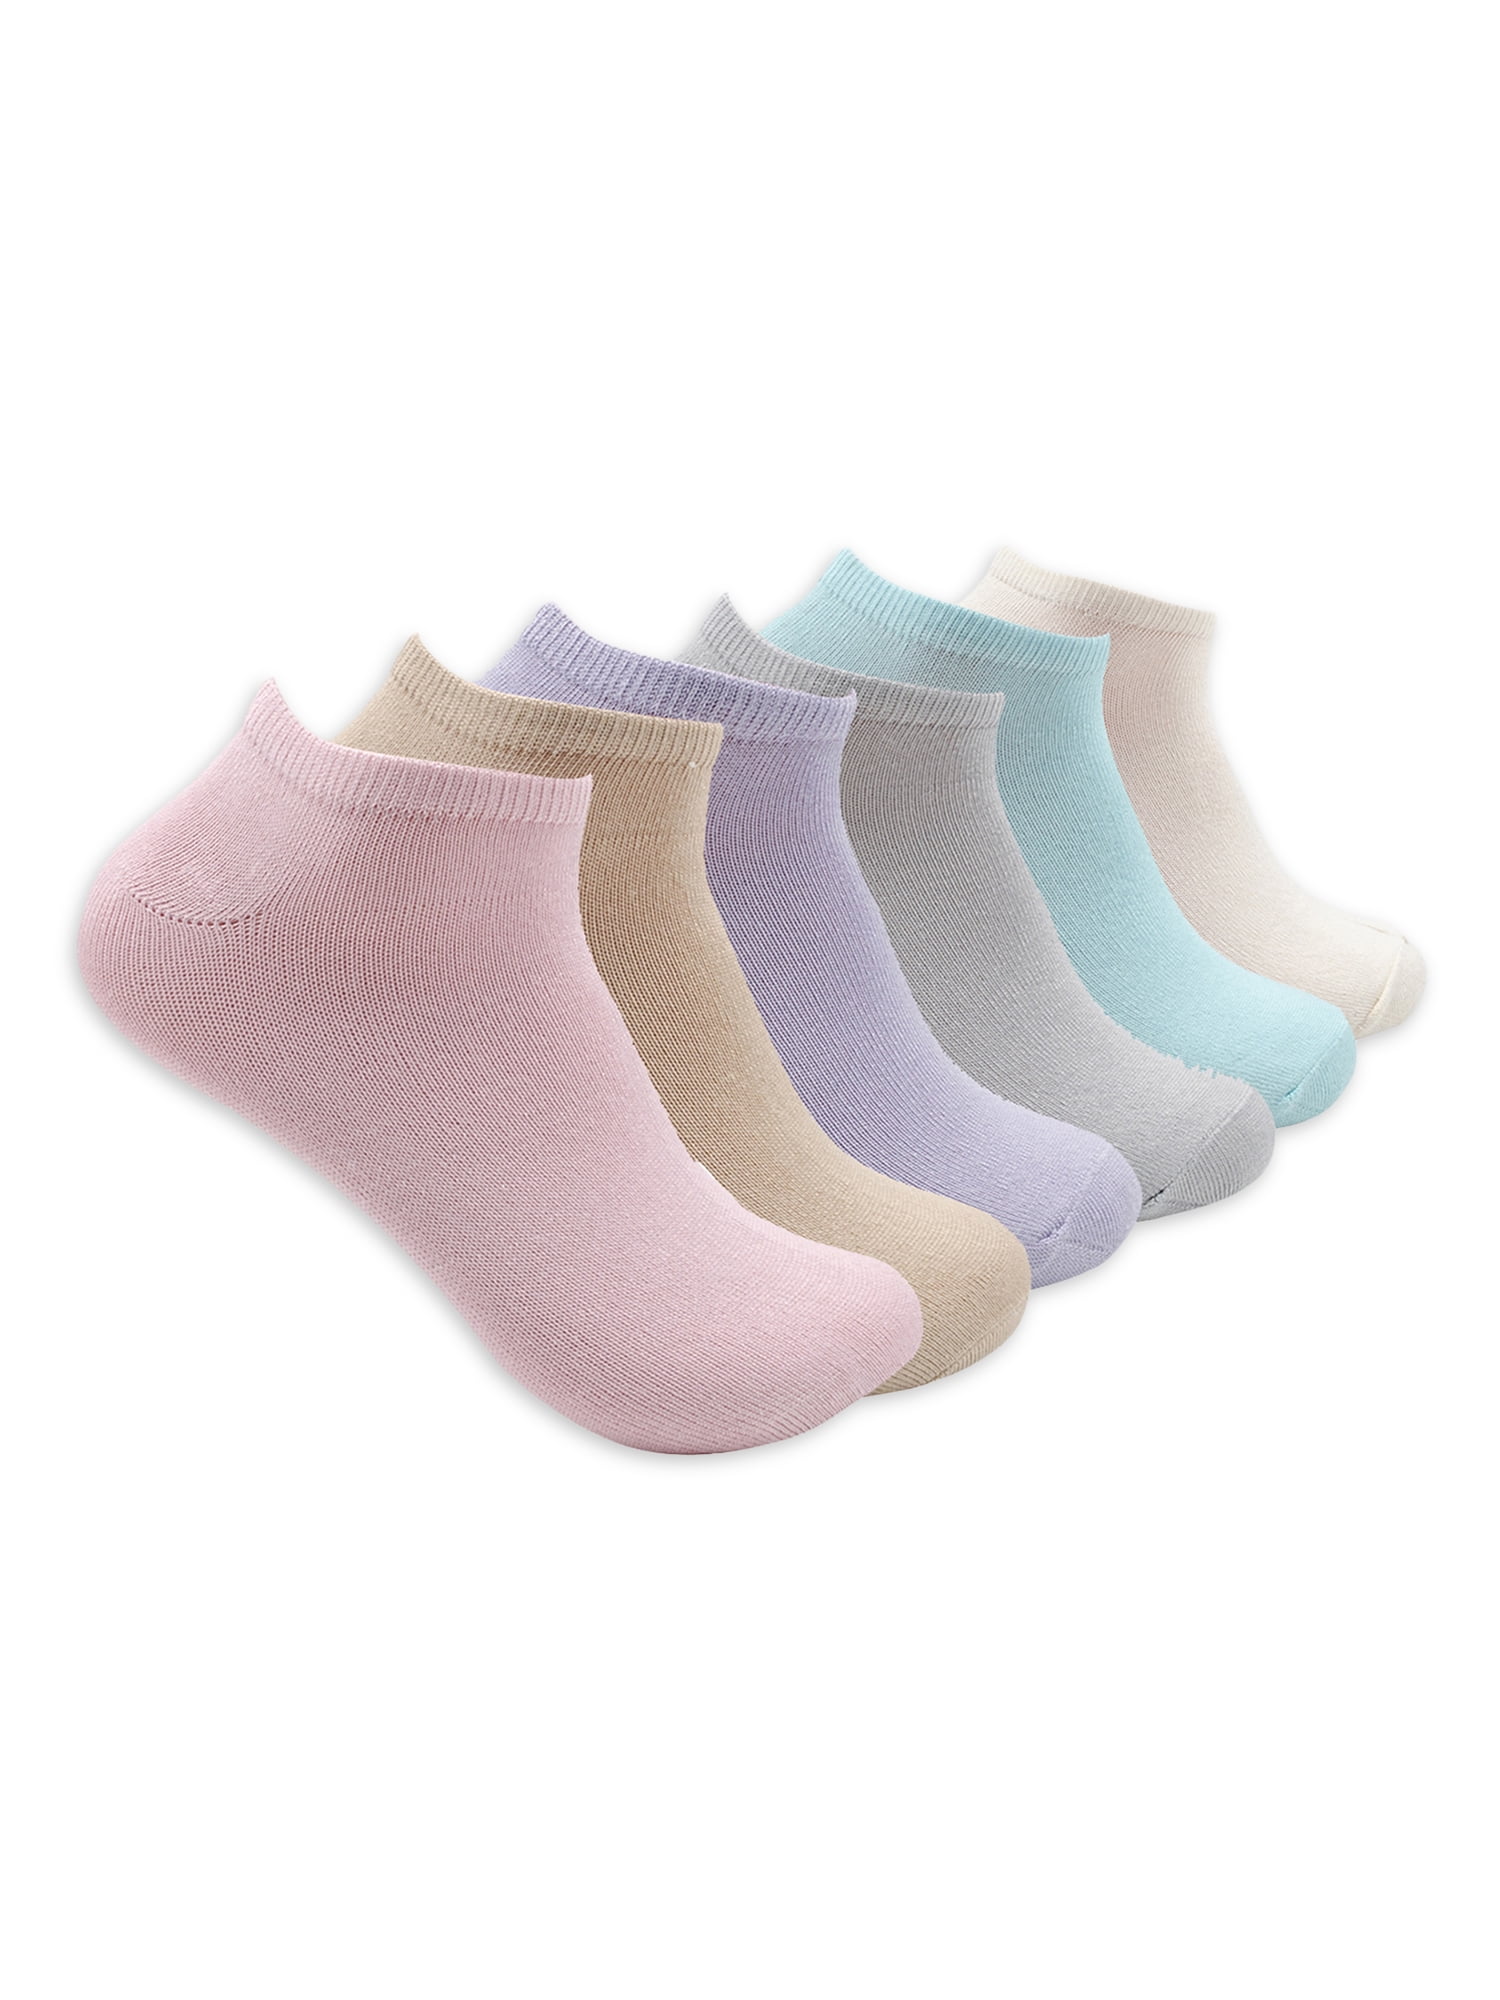 Steve Madden Women's Super Soft Low-Cut Socks, No-Show Liner Socks, 6 ...